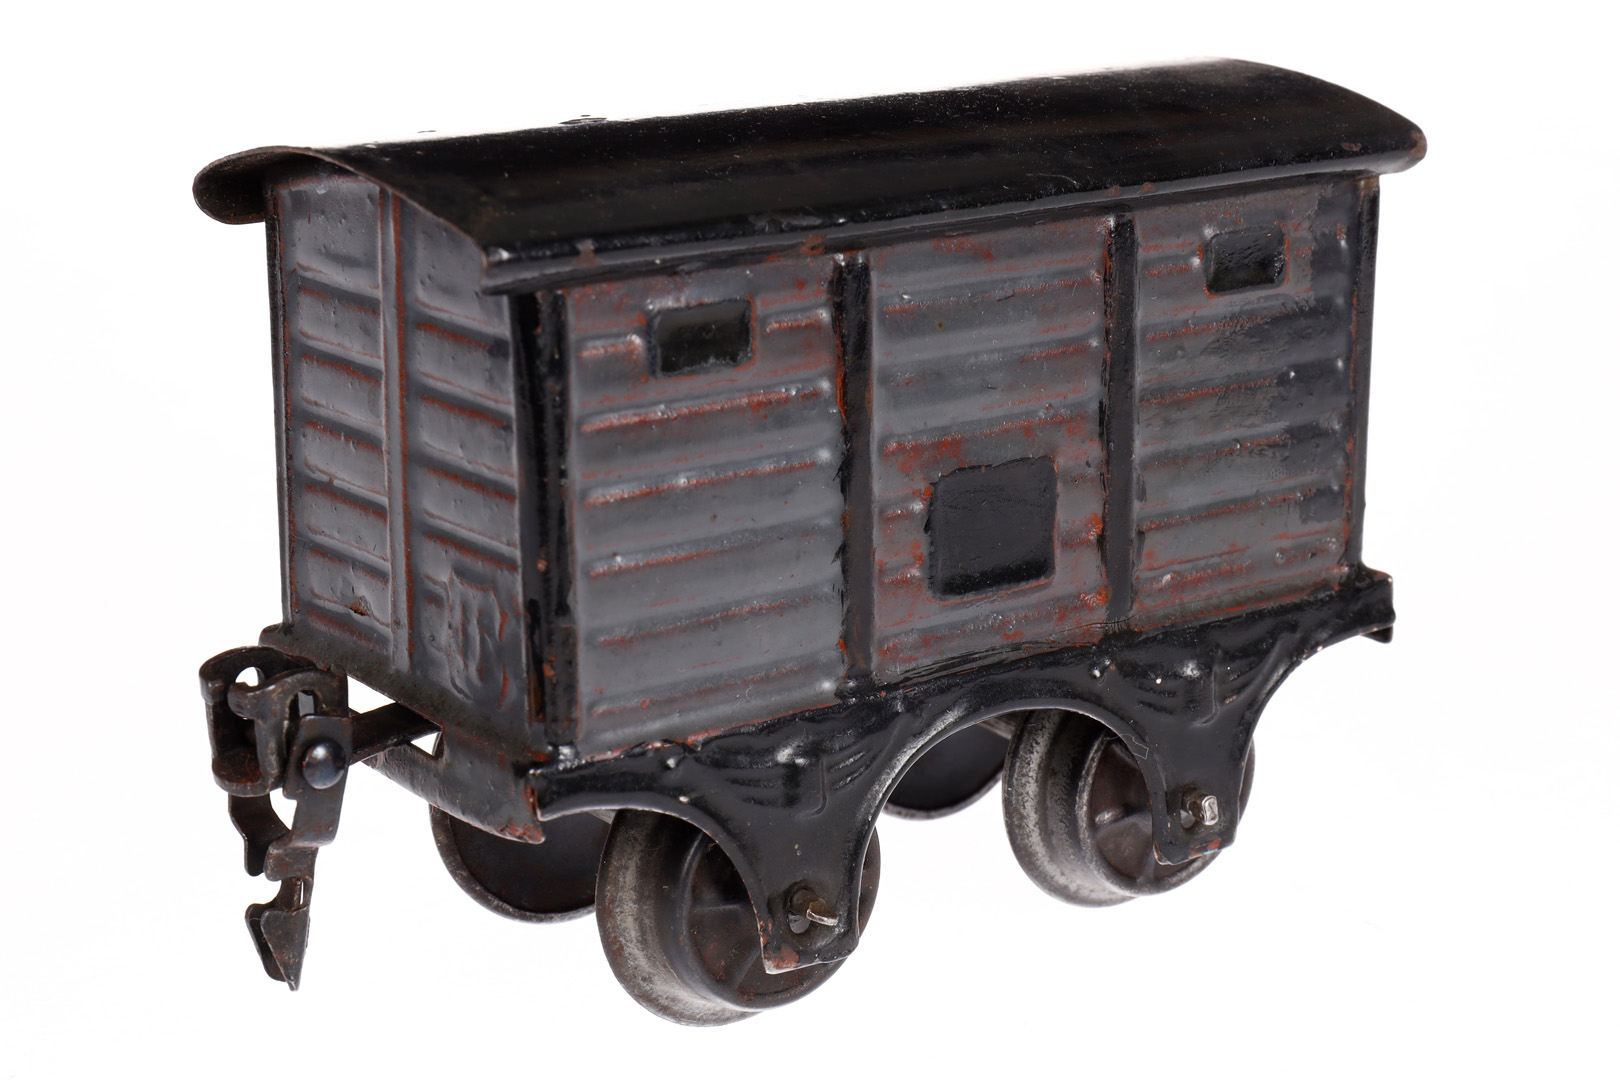 Märklin ged. Güterwagen 1803, Spur 0, uralt, HL, mit 1 TÖ, meist rest., L 9,5 - Image 3 of 4